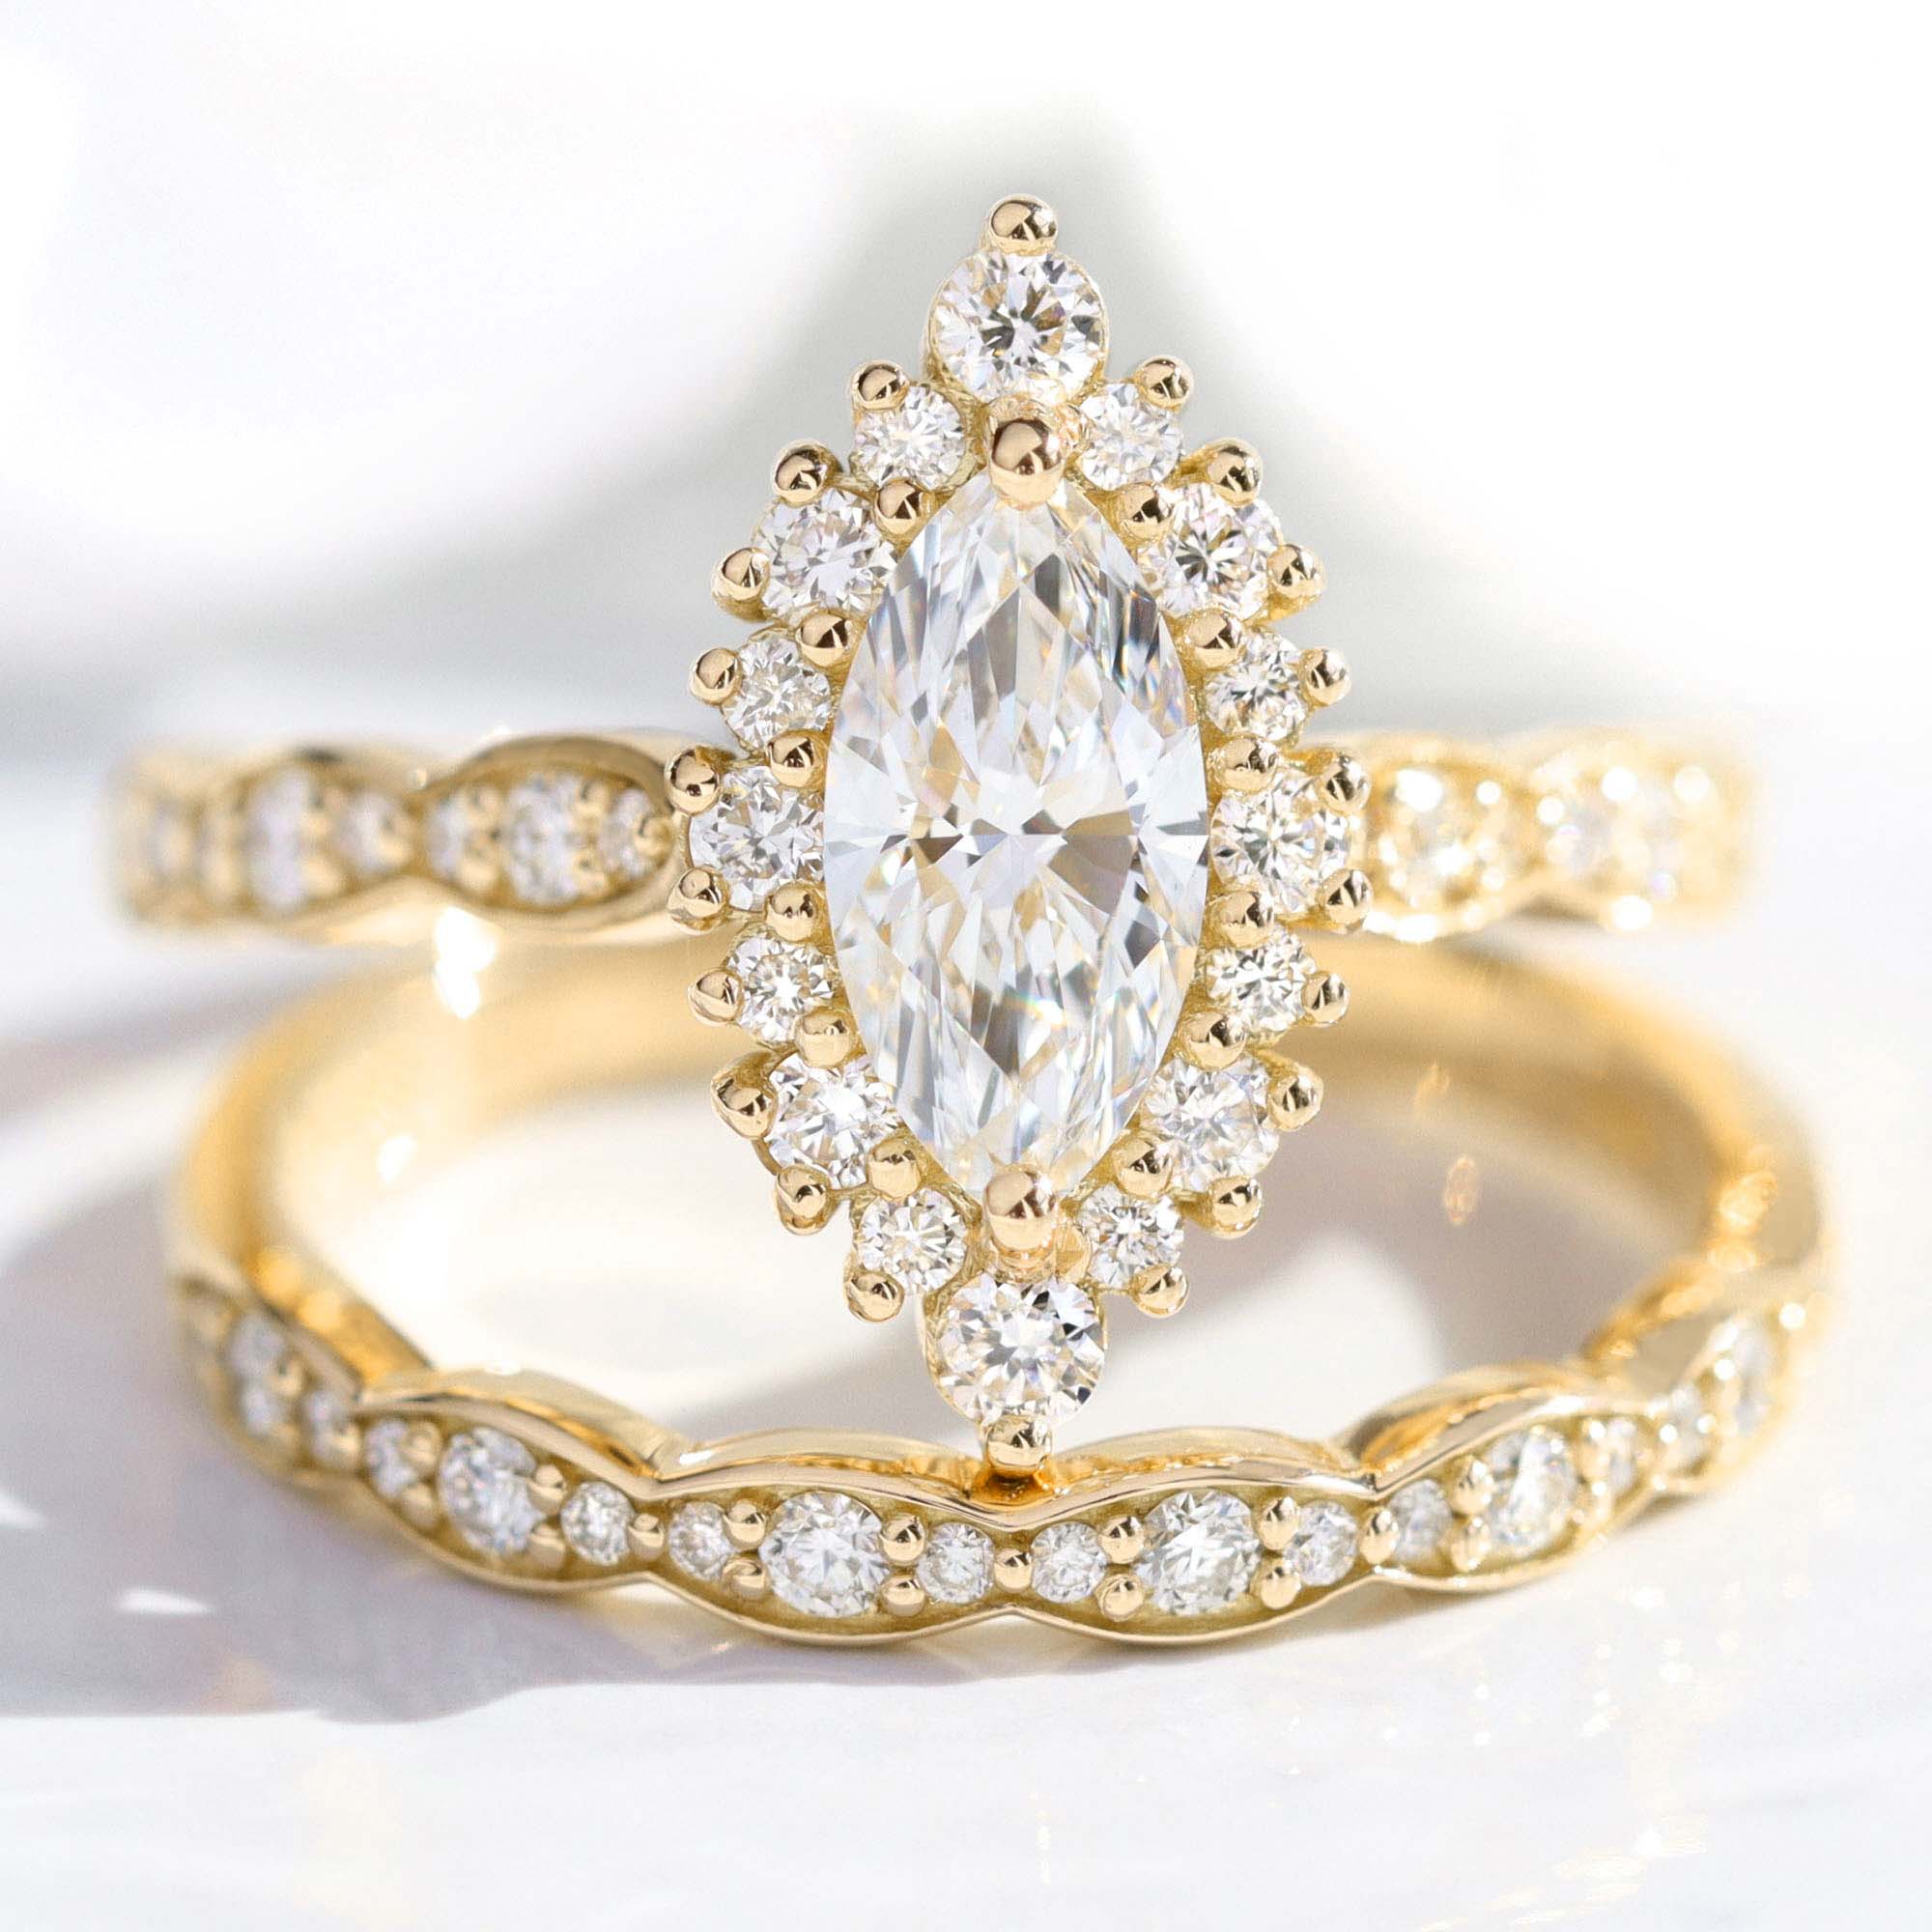 lab diamond ring stack white gold marquise diamond halo engagement ring set La More Design Jewelry